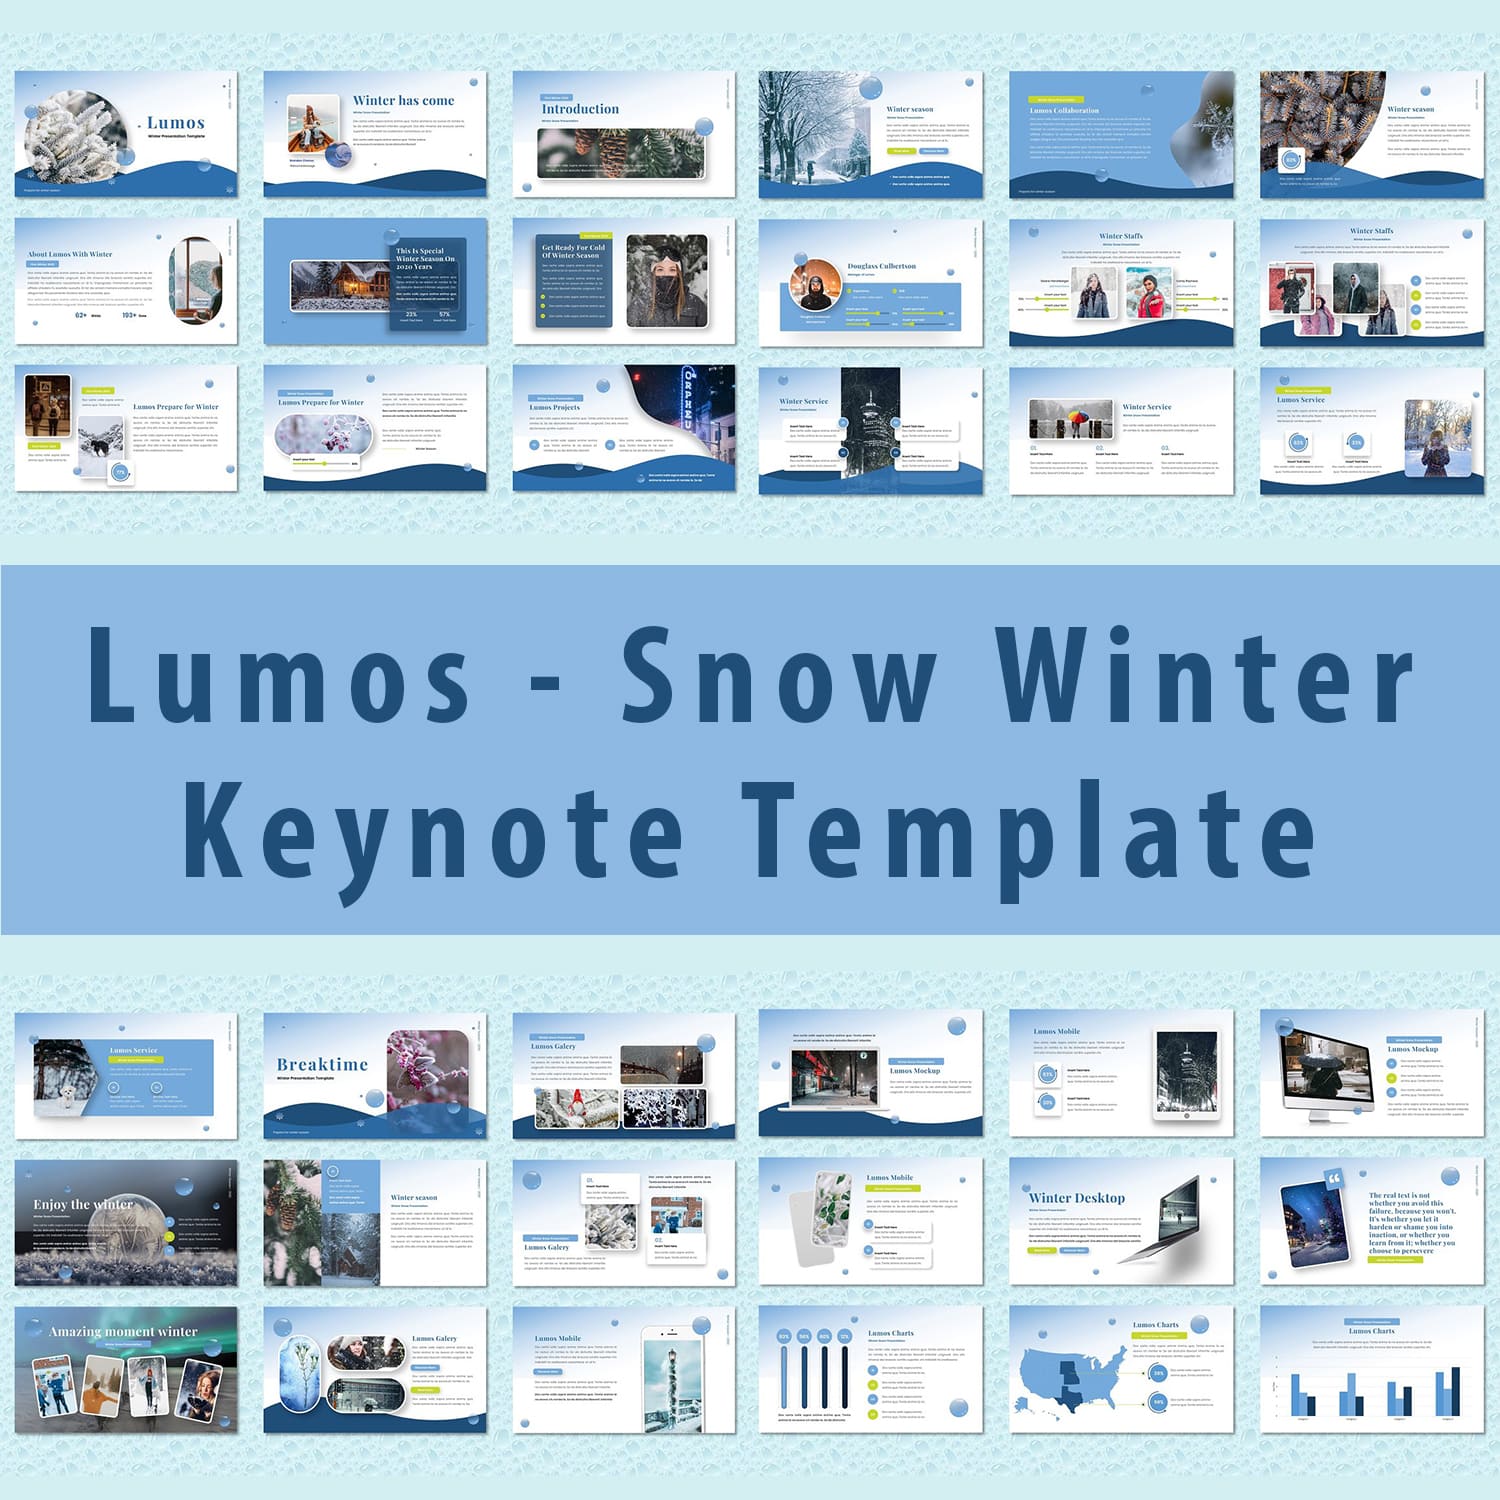 Lumos - Snow Winter Keynote Template main cover.